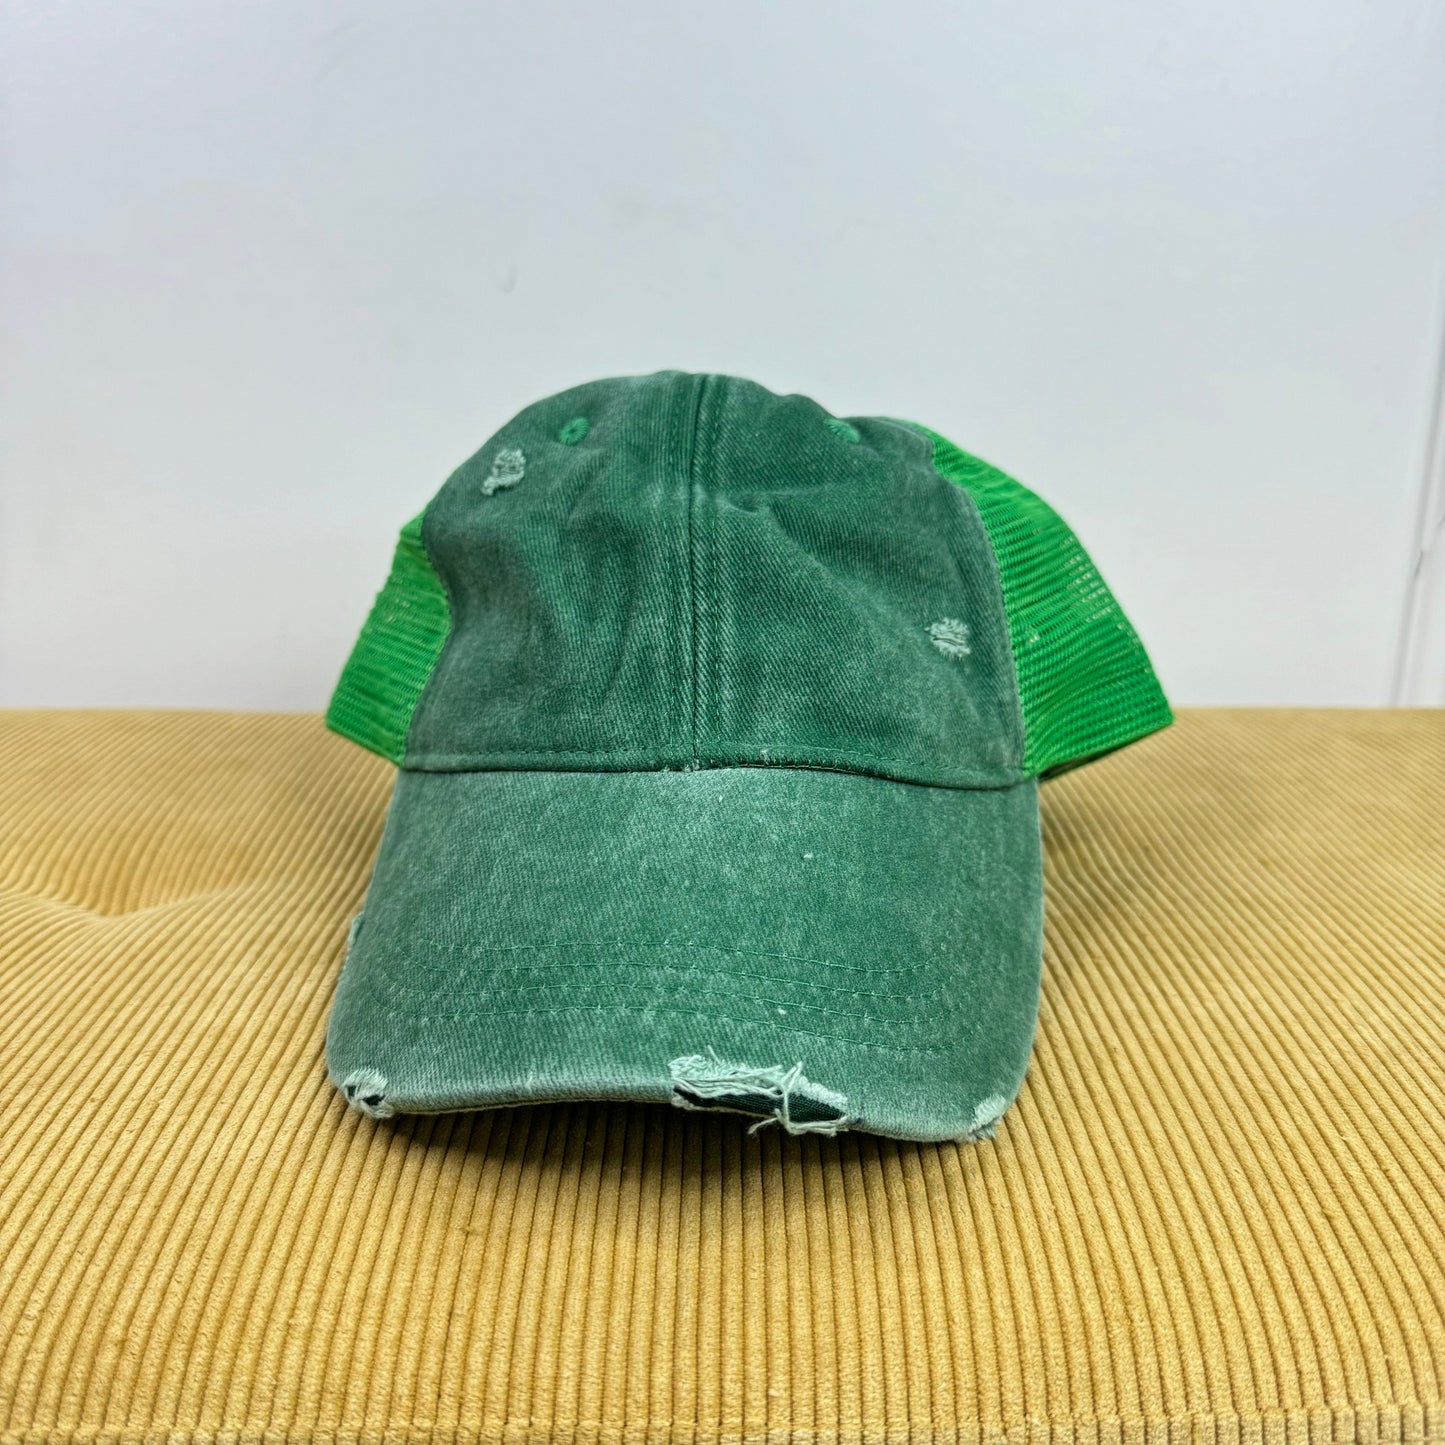 Hat - Green Snapback